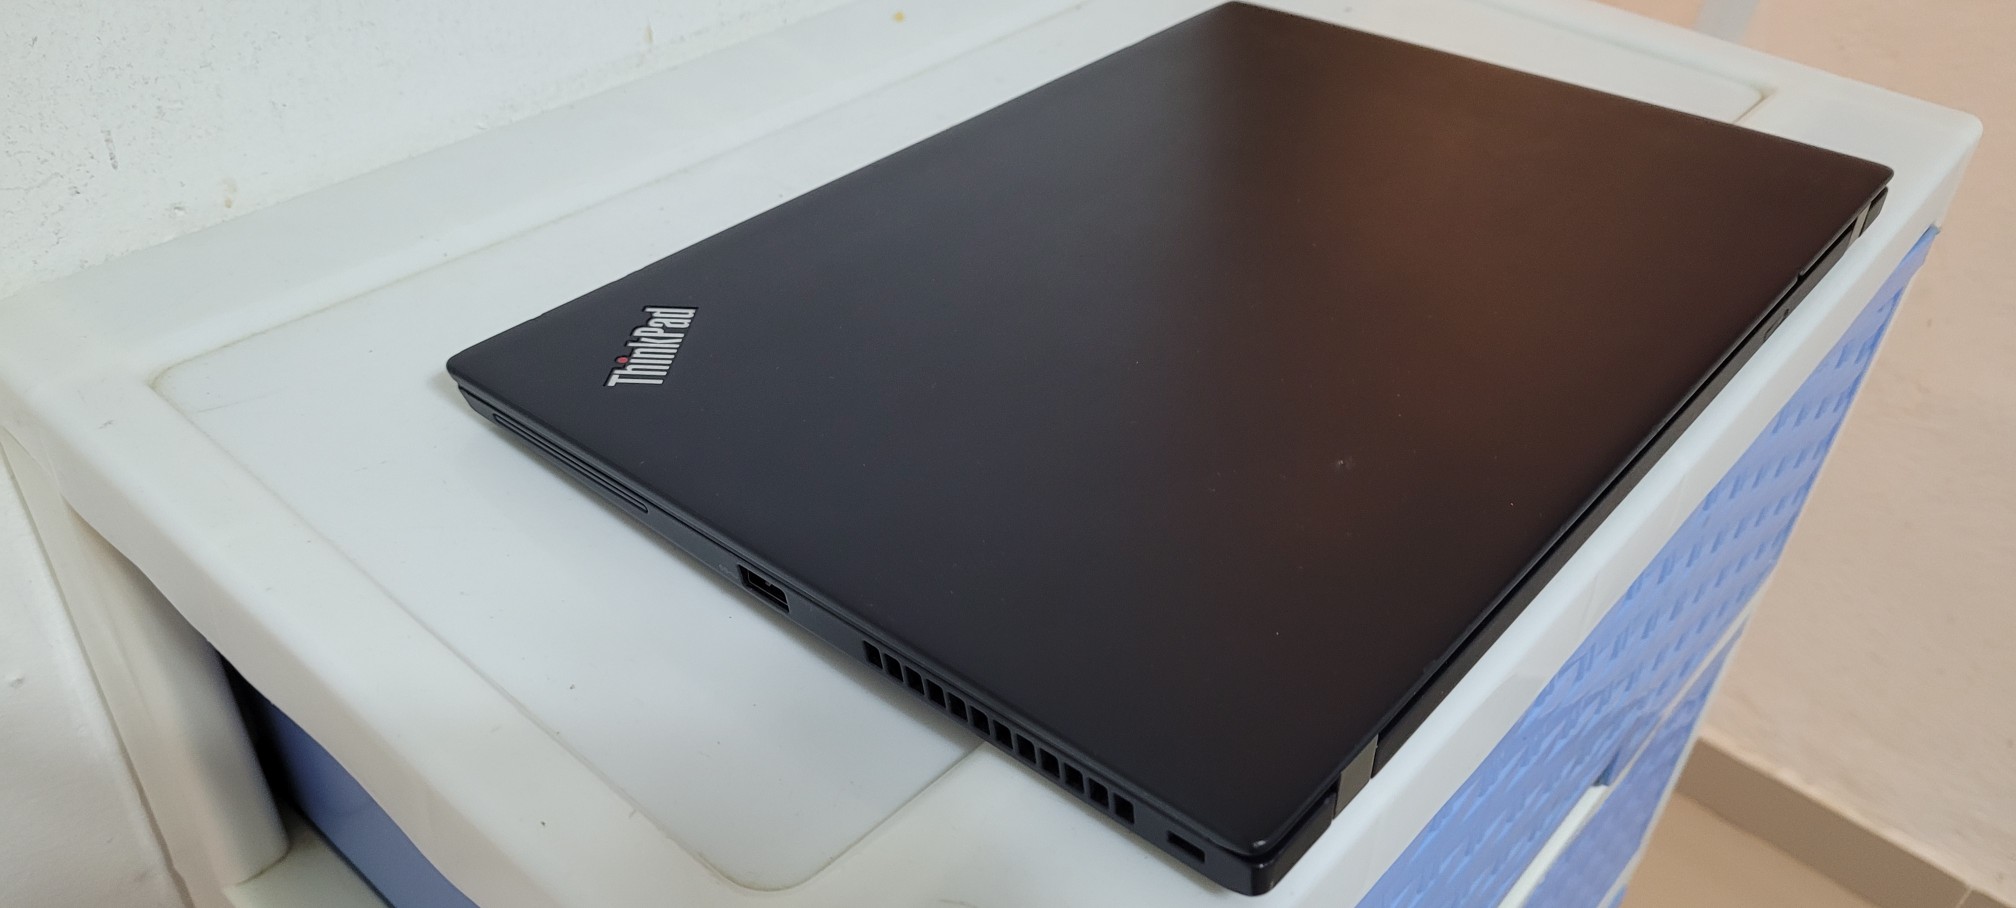 computadoras y laptops - Lenovo Slim t460 14 Pulg Core i5 6ta Gen Ram 8gb ddr4 Disco 256gb SSD Bluetoth 2